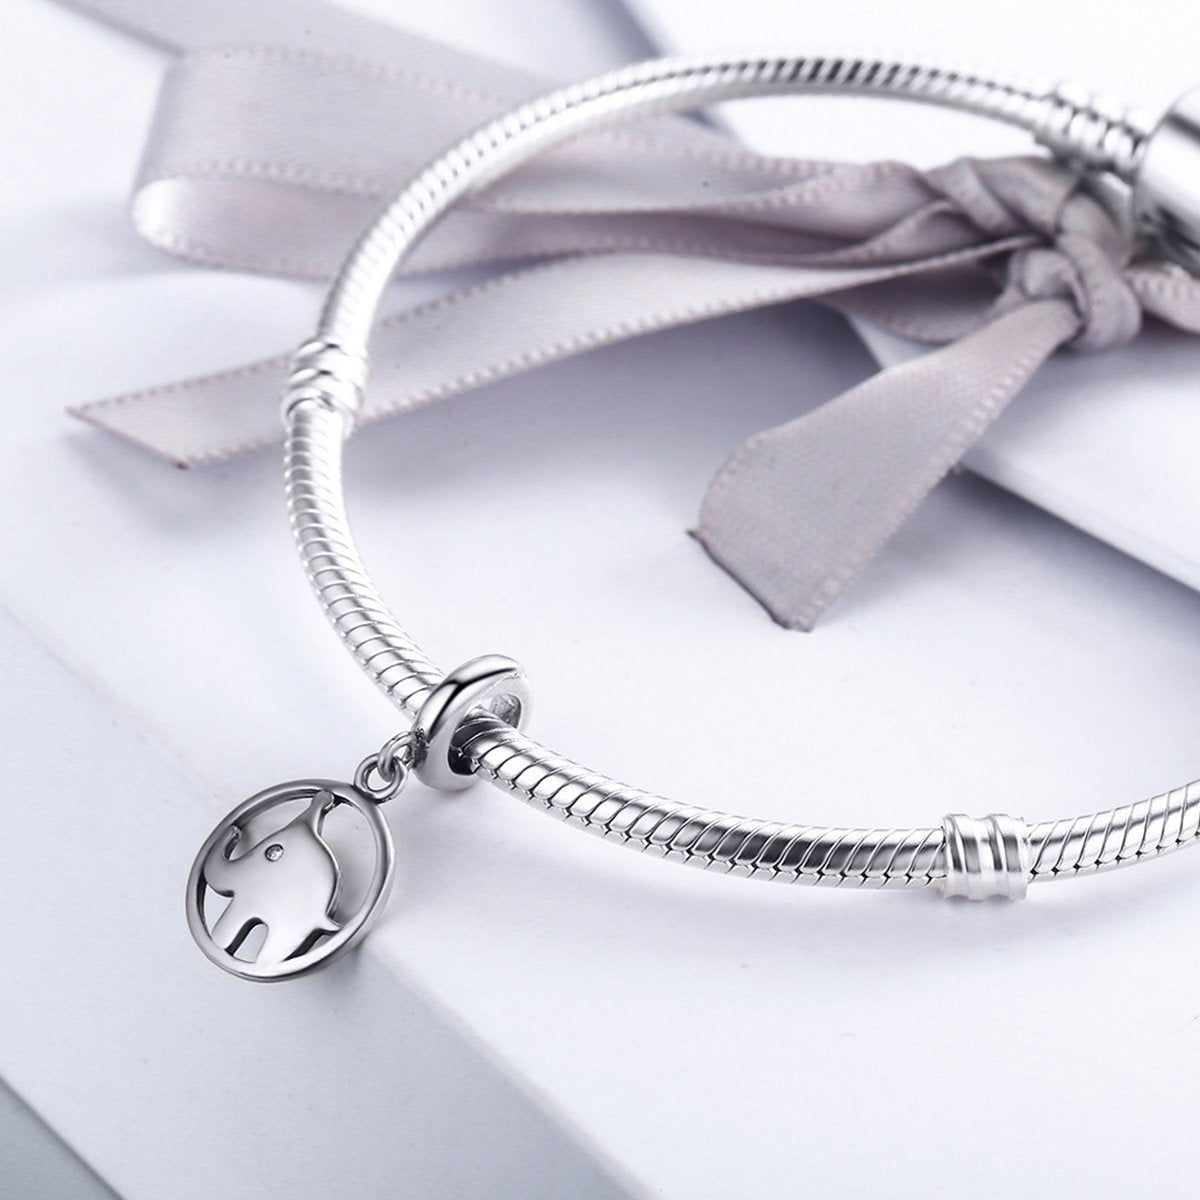 Sterling 925 silver charm the circle elephant bead pendant fits Pandora charm and European charm bracelet Xaxe.com